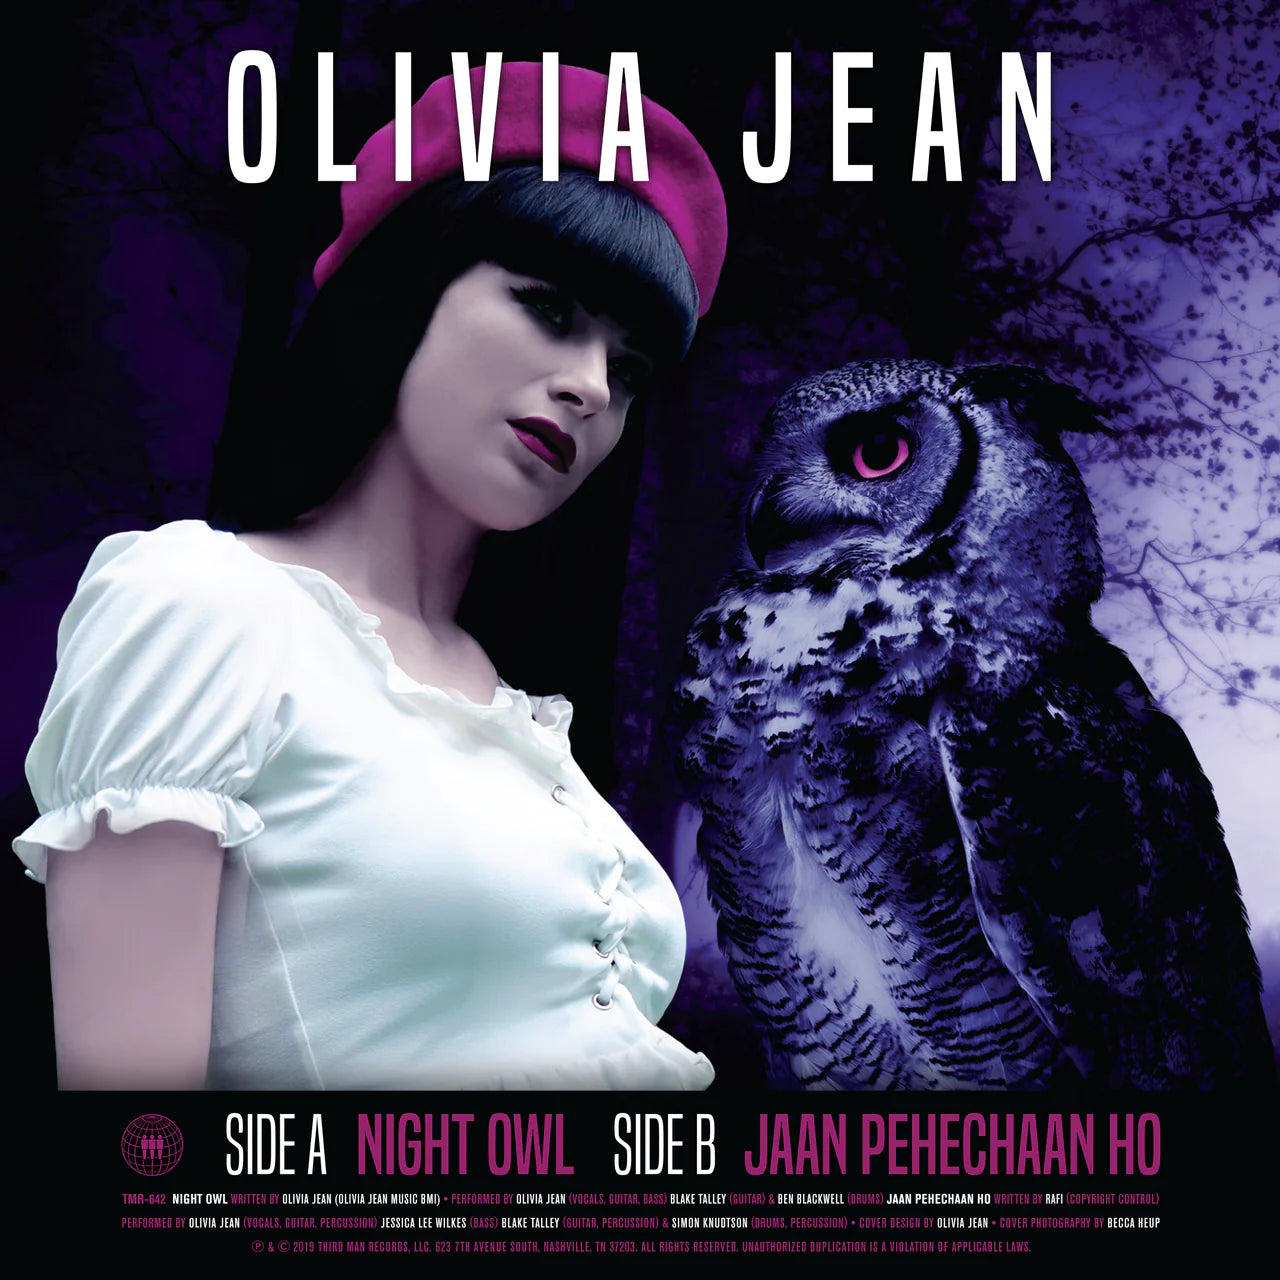 Night Owl 7" Vinyl (Single)